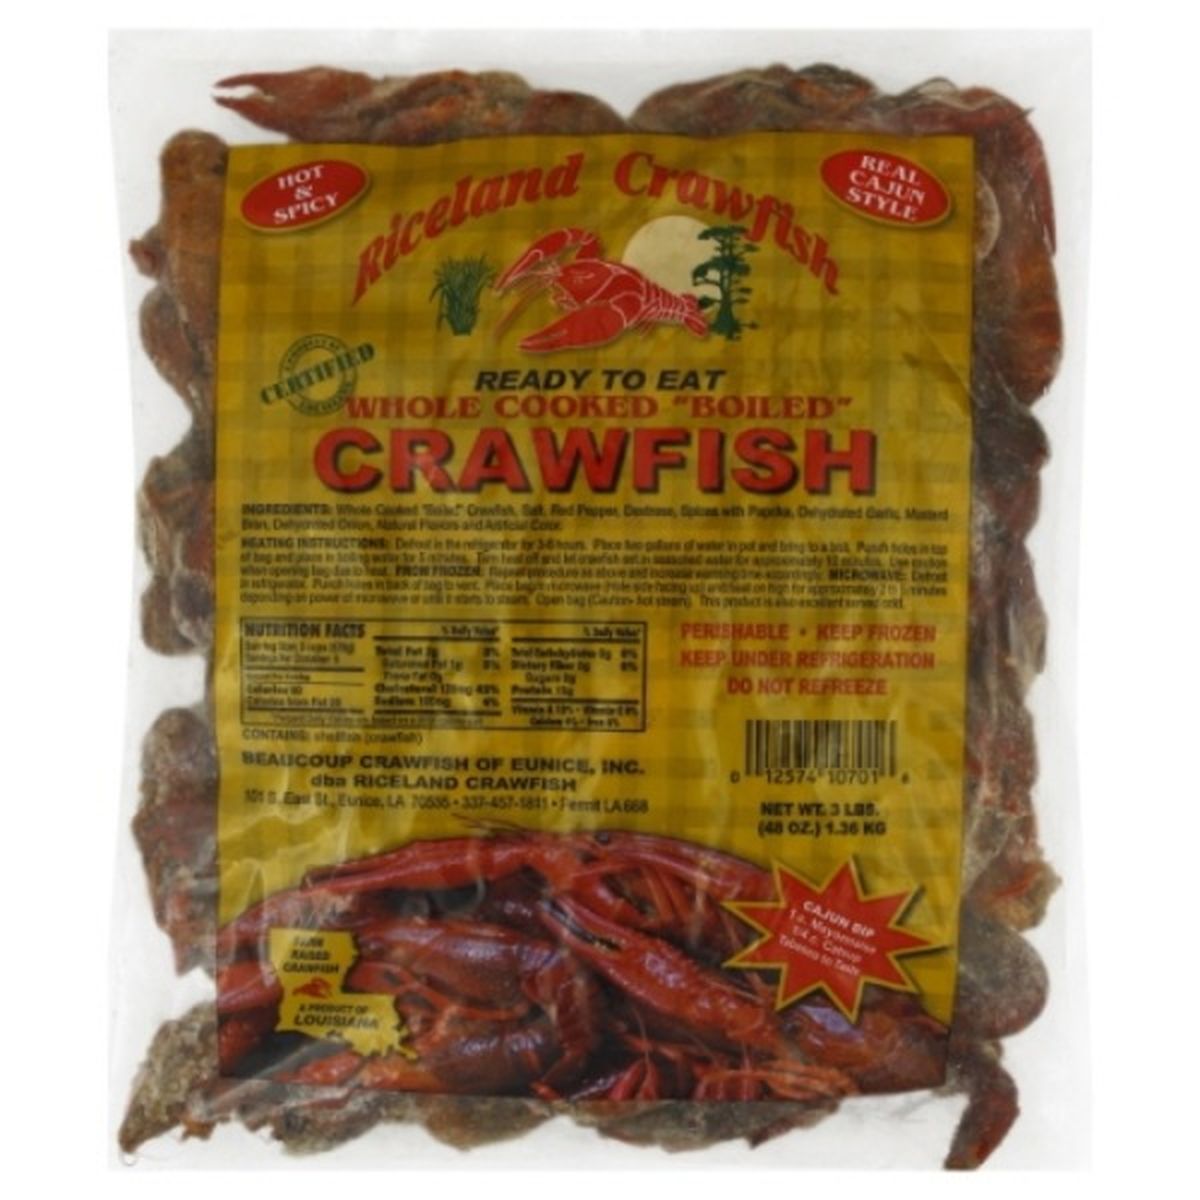 Calories in Riceland Crawfish Crawfish, Boiled, Whole